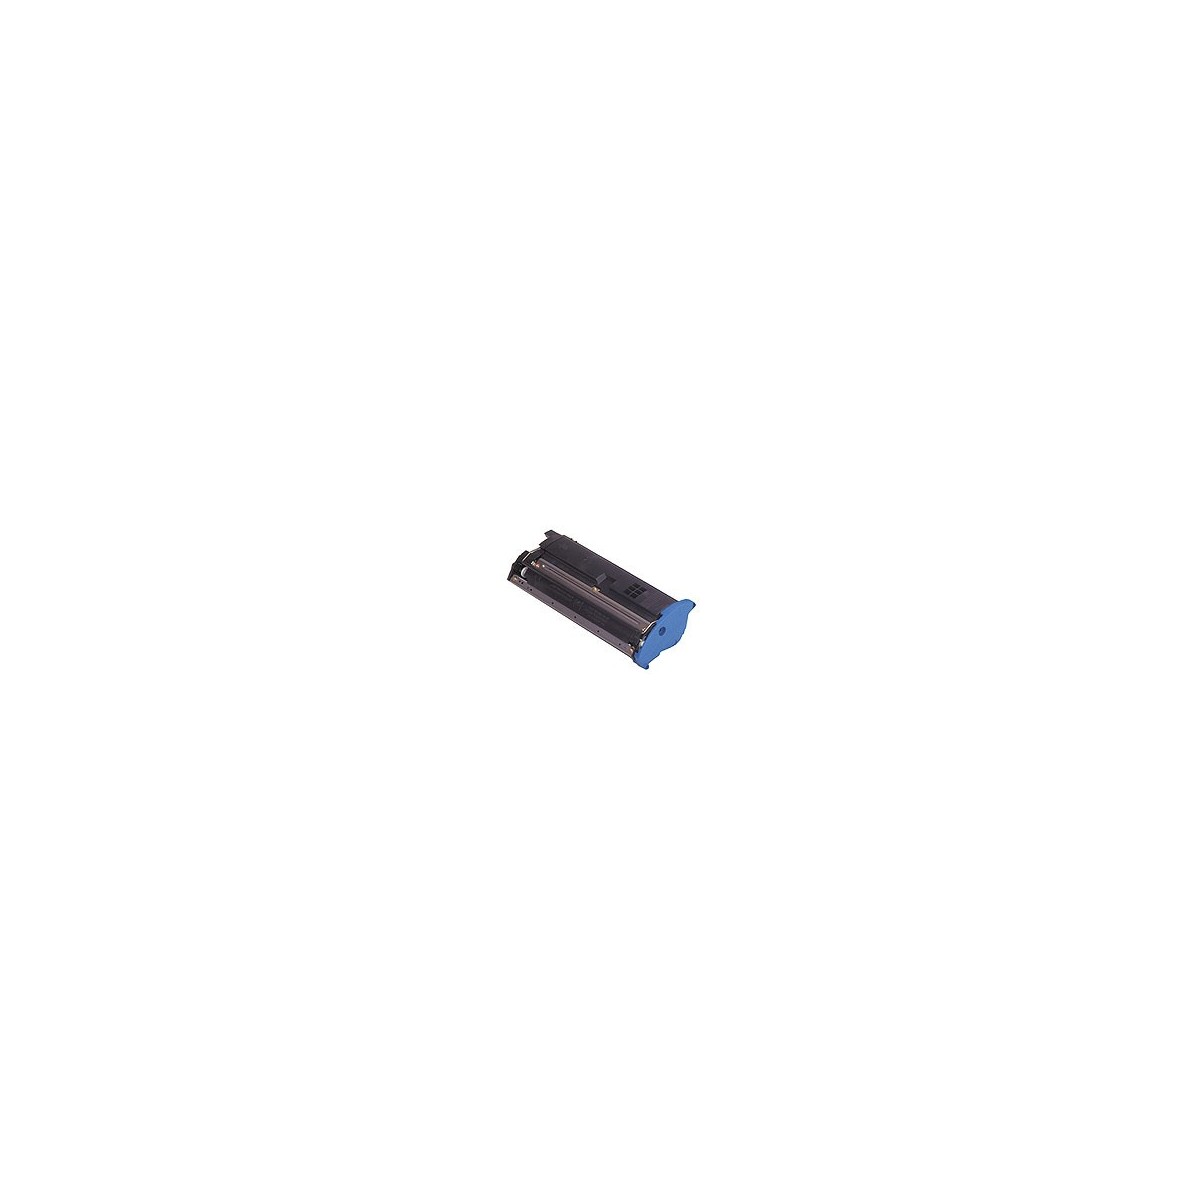 Konica Minolta mc 2200 Cyan toner cartridge - 6000 pages - Cyan